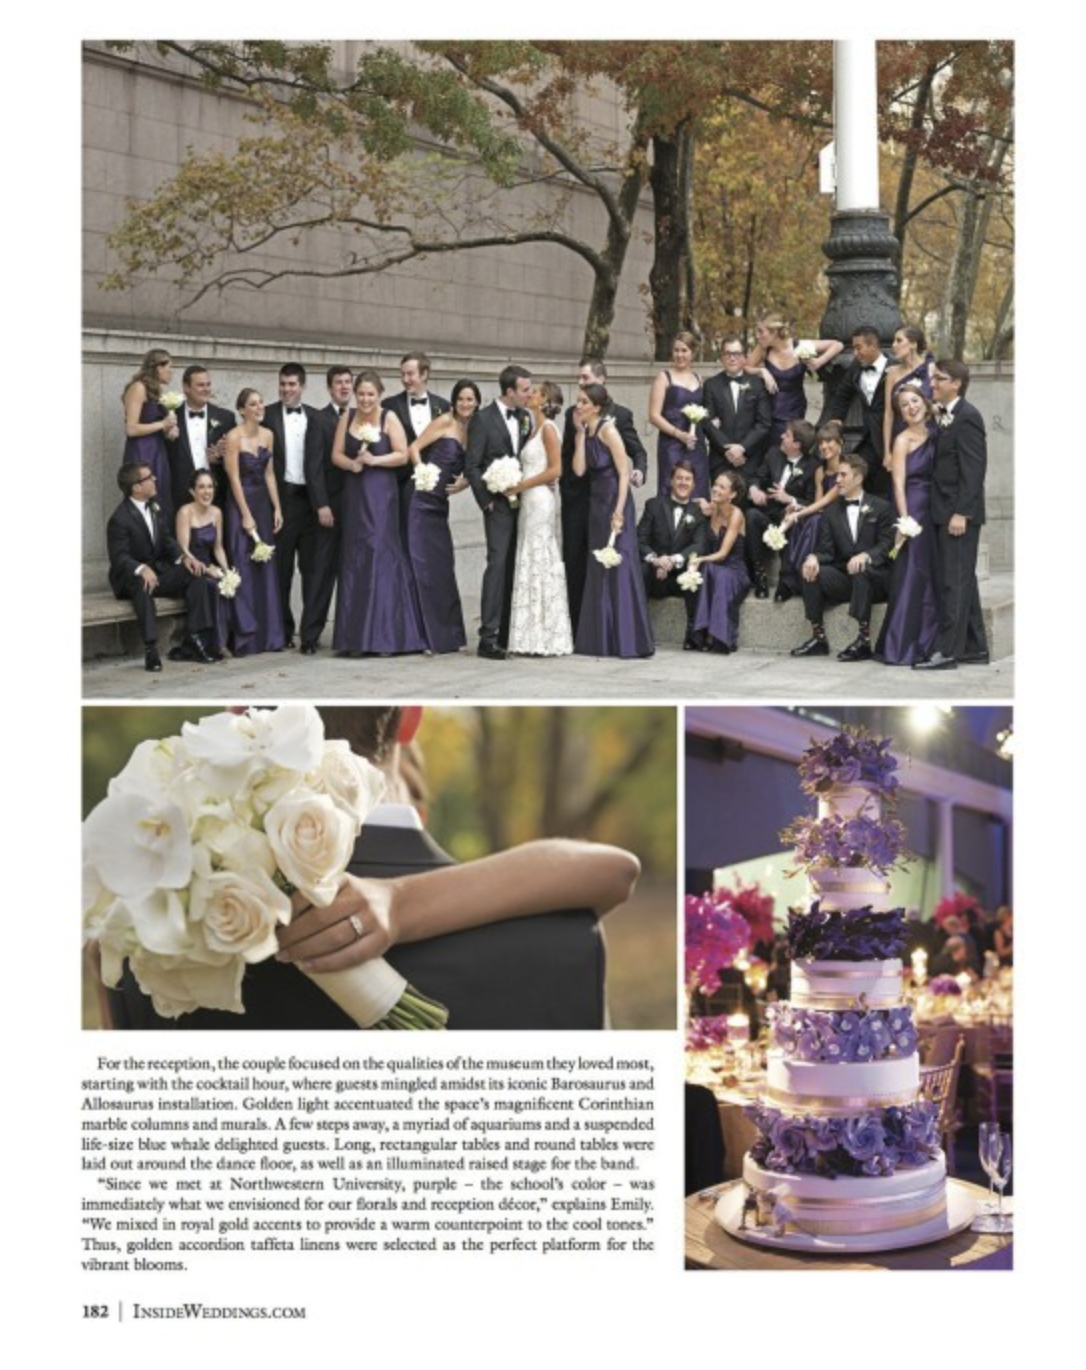 Inside Wedding Magazine Wedding Feature - 5